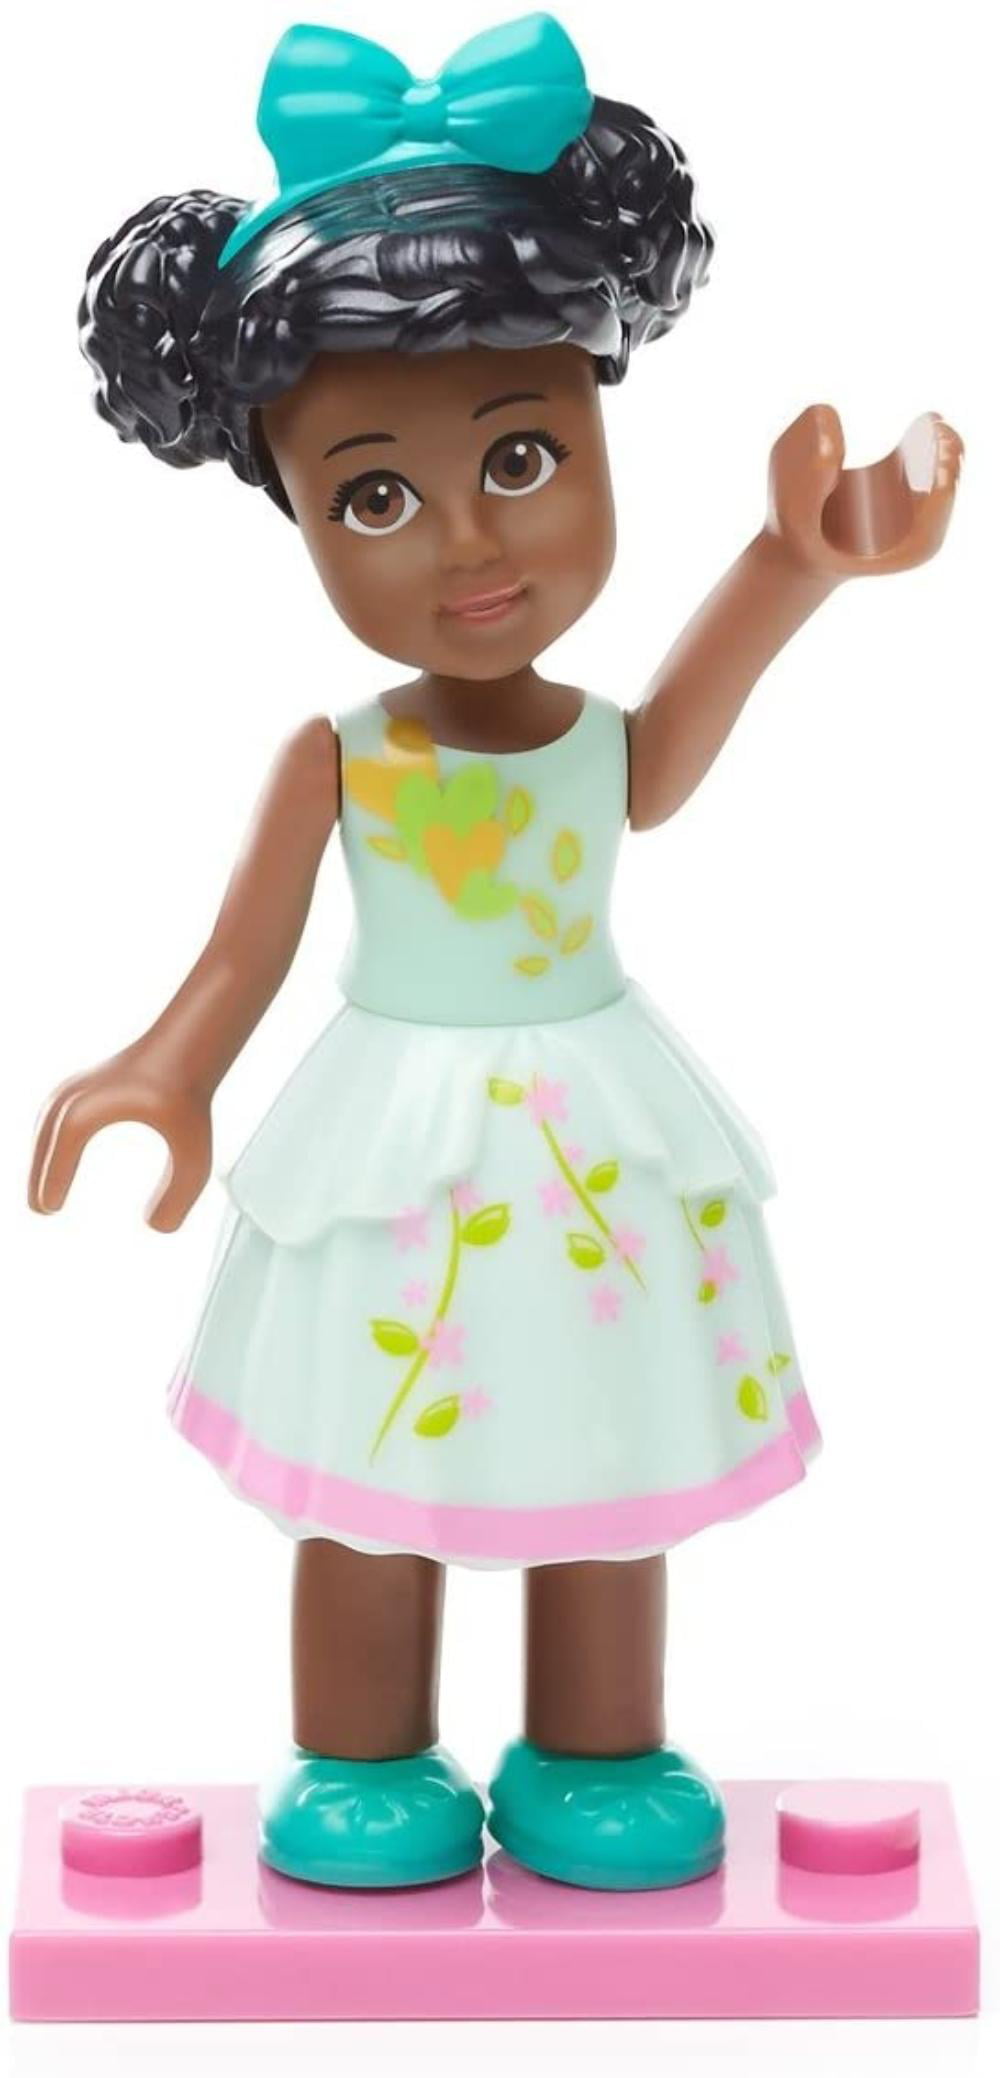 MEGA Construx Welliewishers Willa Mini Figure Toy Wellie Wishers 10 Pcs for sale online